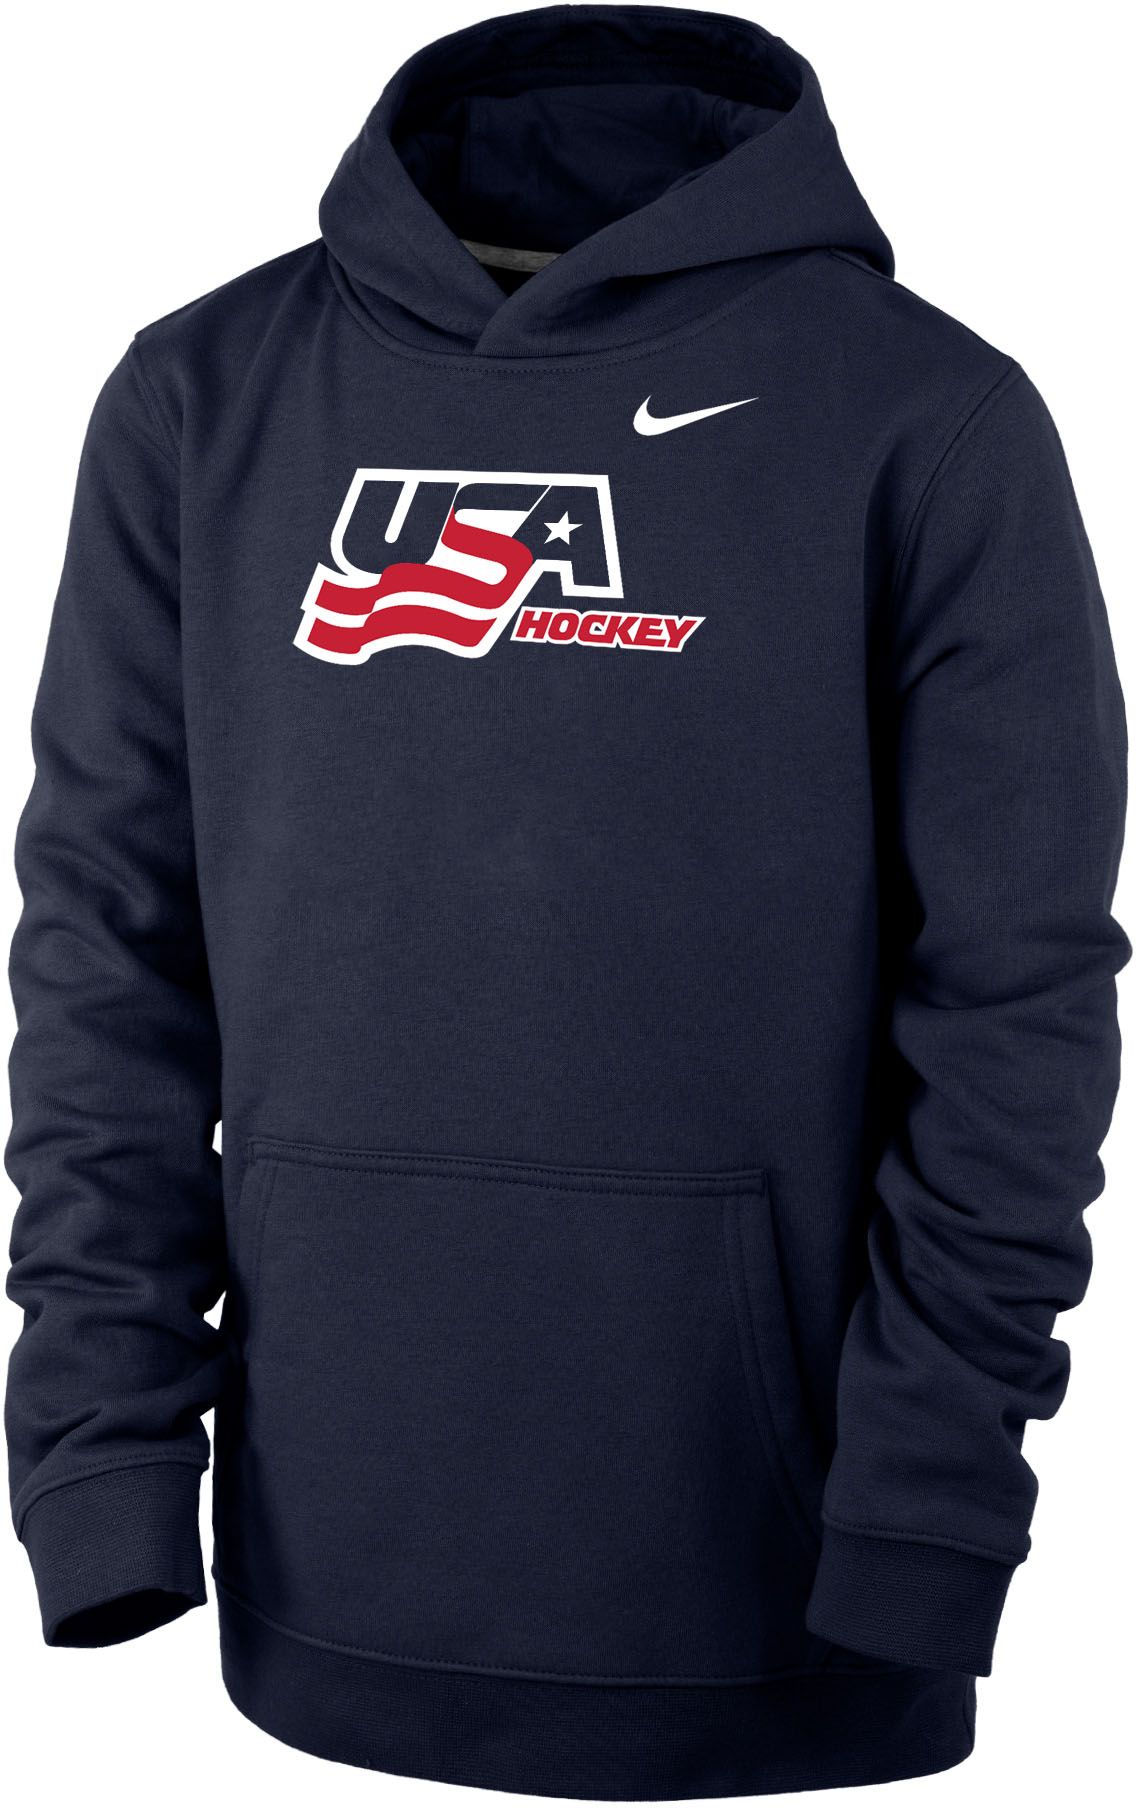 Youth Nike USA Hockey Club Fleece Hooded Sweatshirt